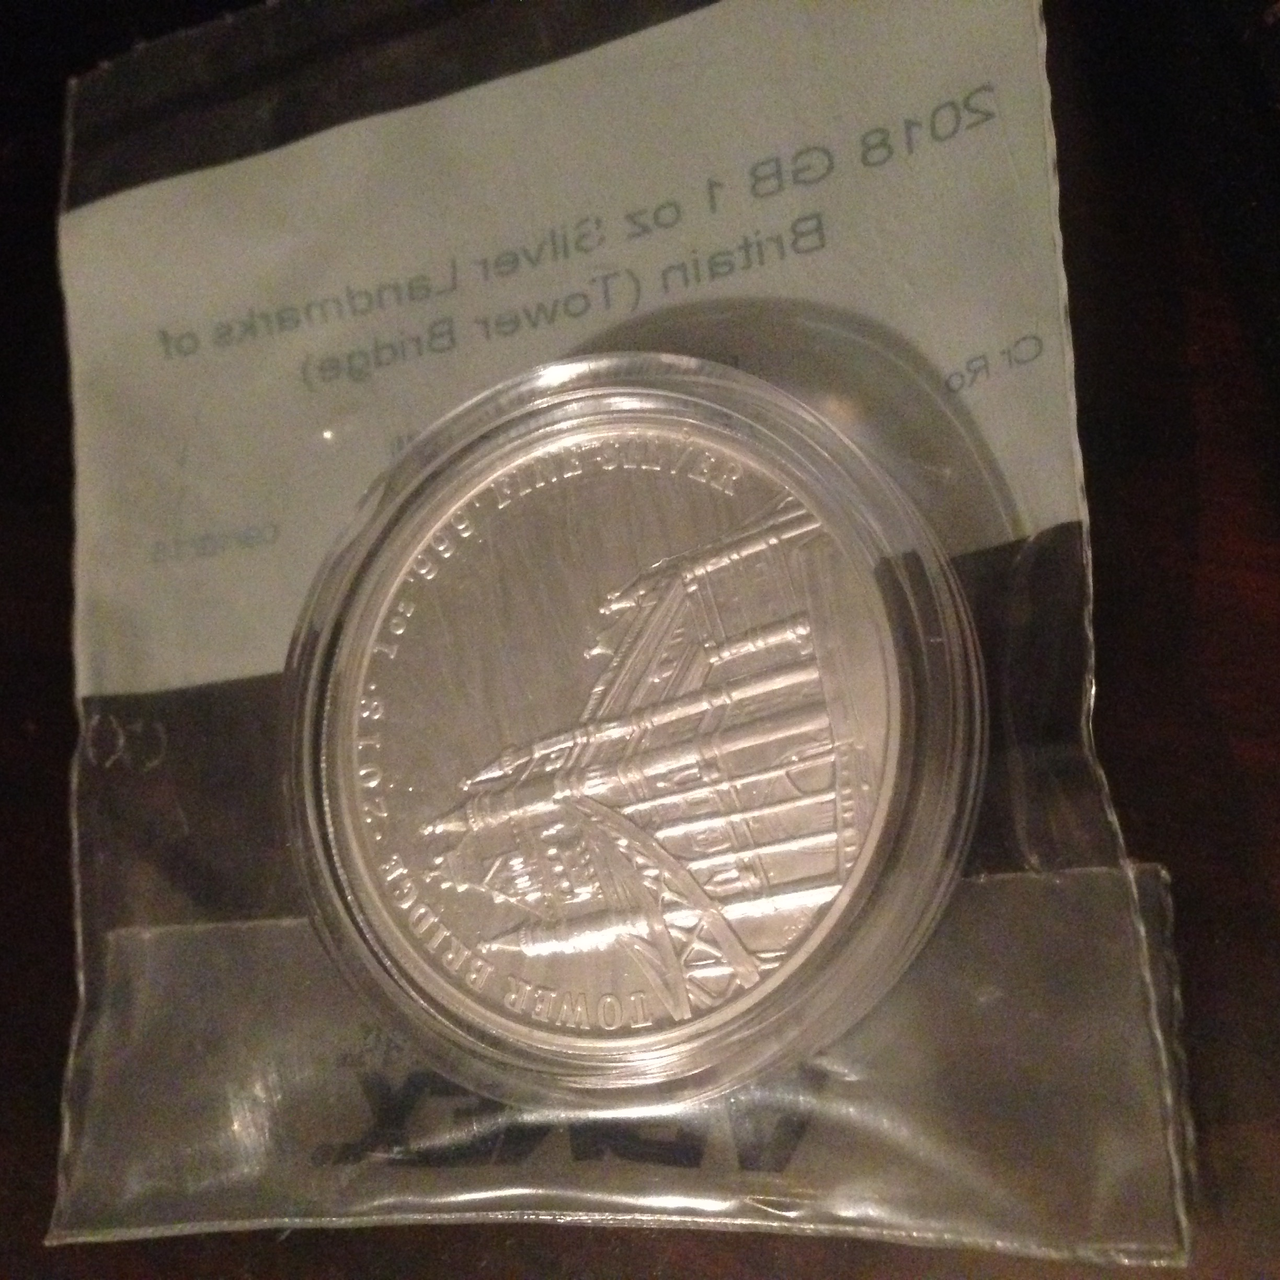 Barbados 1 Dollar $1 2018 Caribbean Seahorse Silver 999 1 oz BU Coin in Capsule